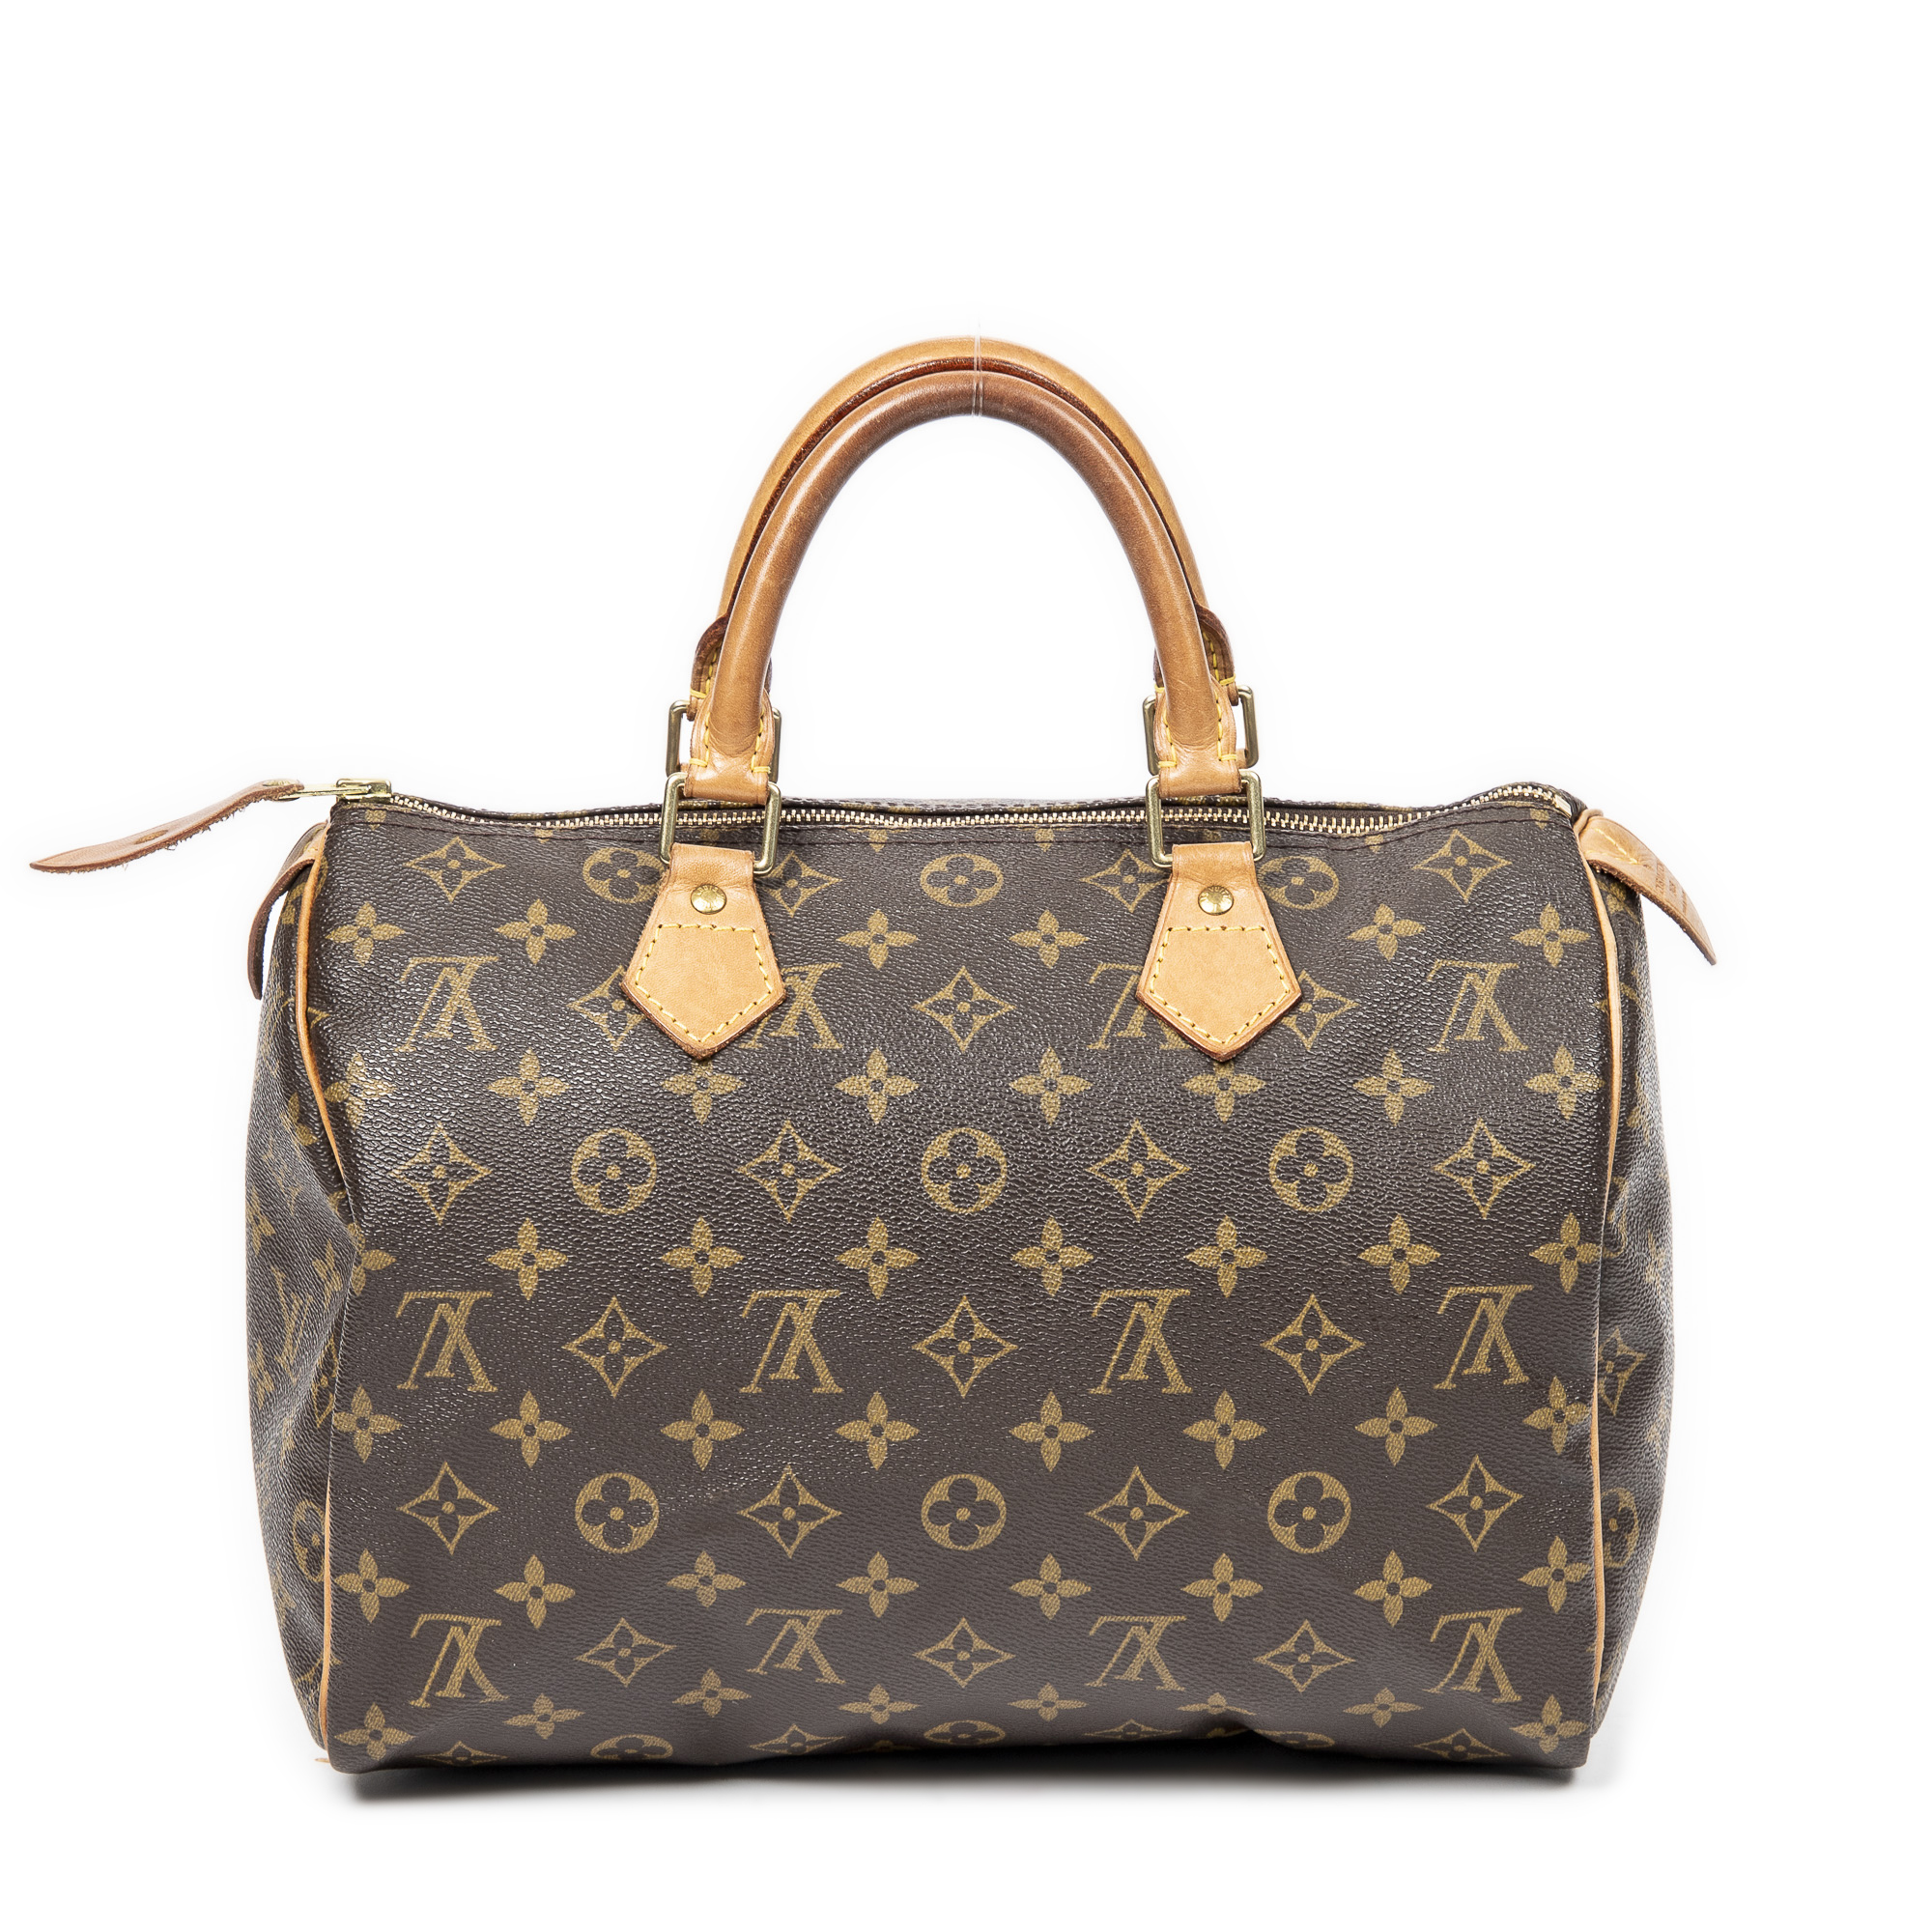 Louis Vuitton - Authenticated Speedy Bandoulière Handbag - Cloth Brown For Woman, Very Good Condition